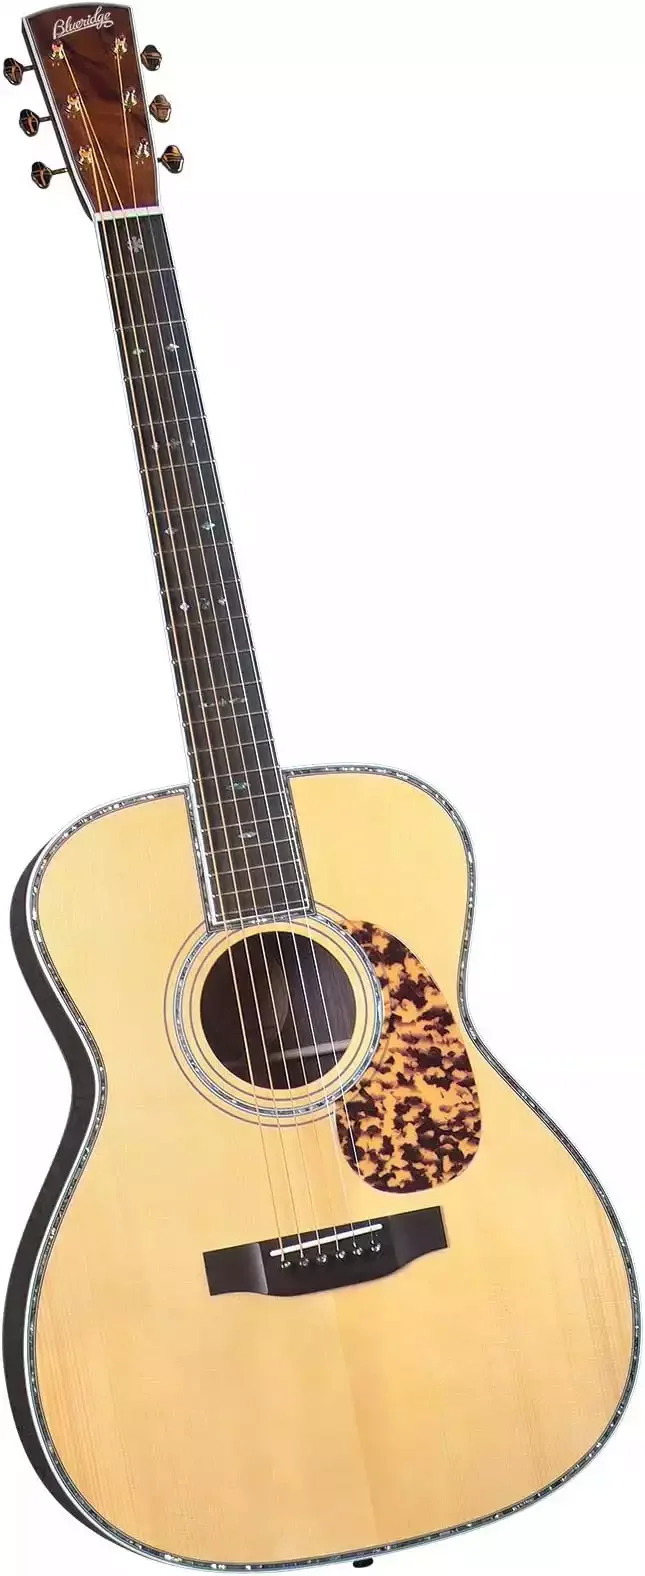 Blueridge BR-183A Historic Craftsman Series 000 Guitar